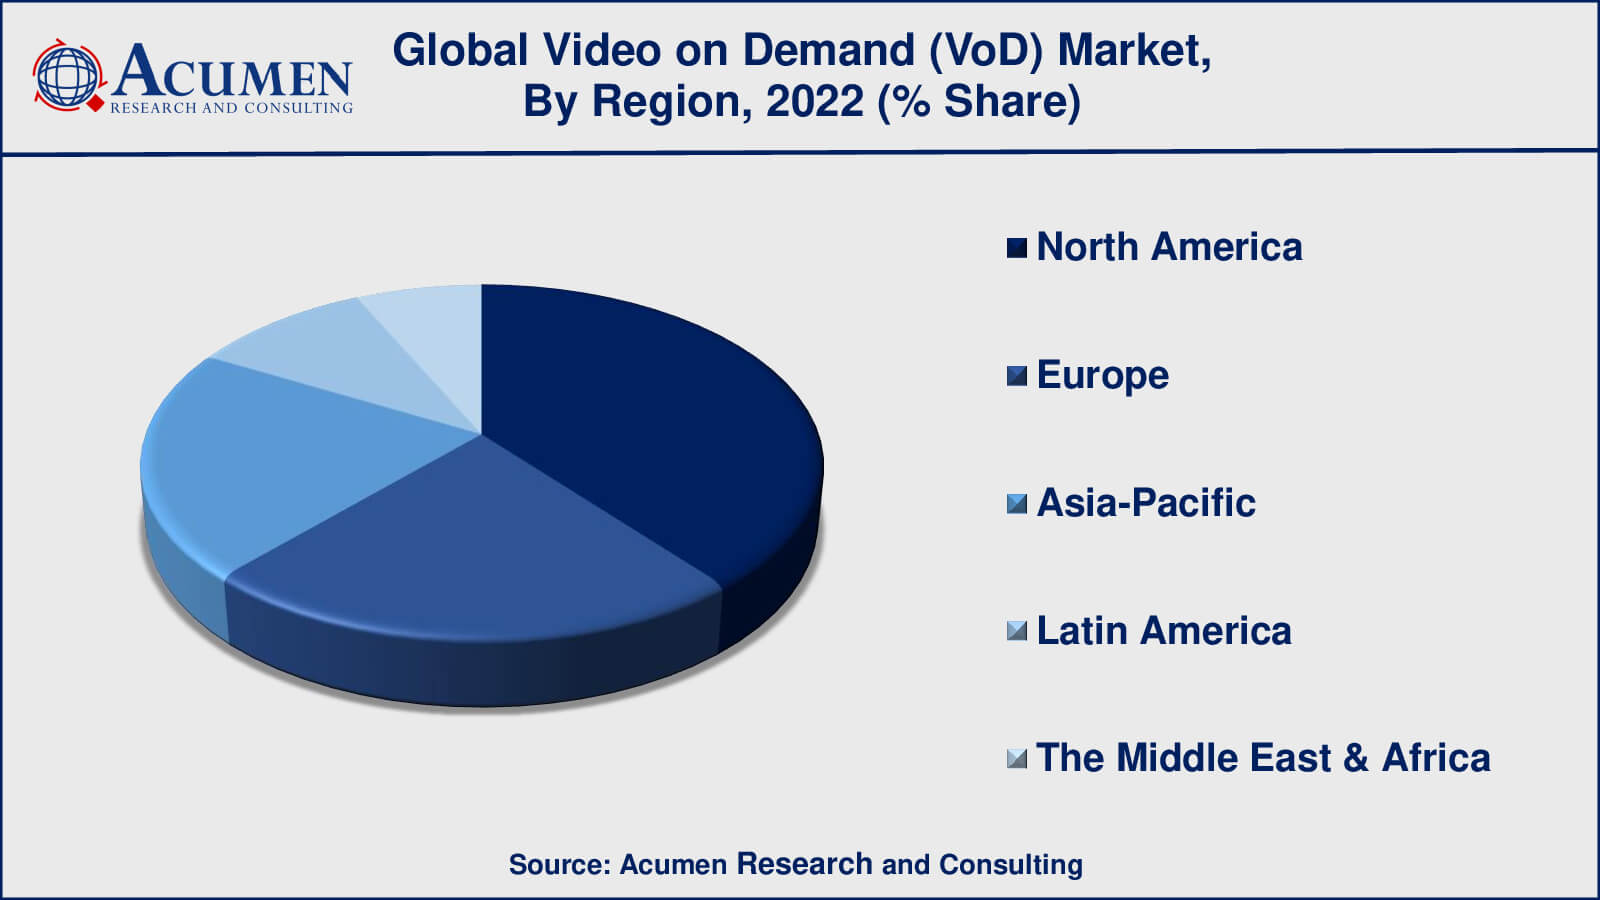 Video on Demand Market Drivers